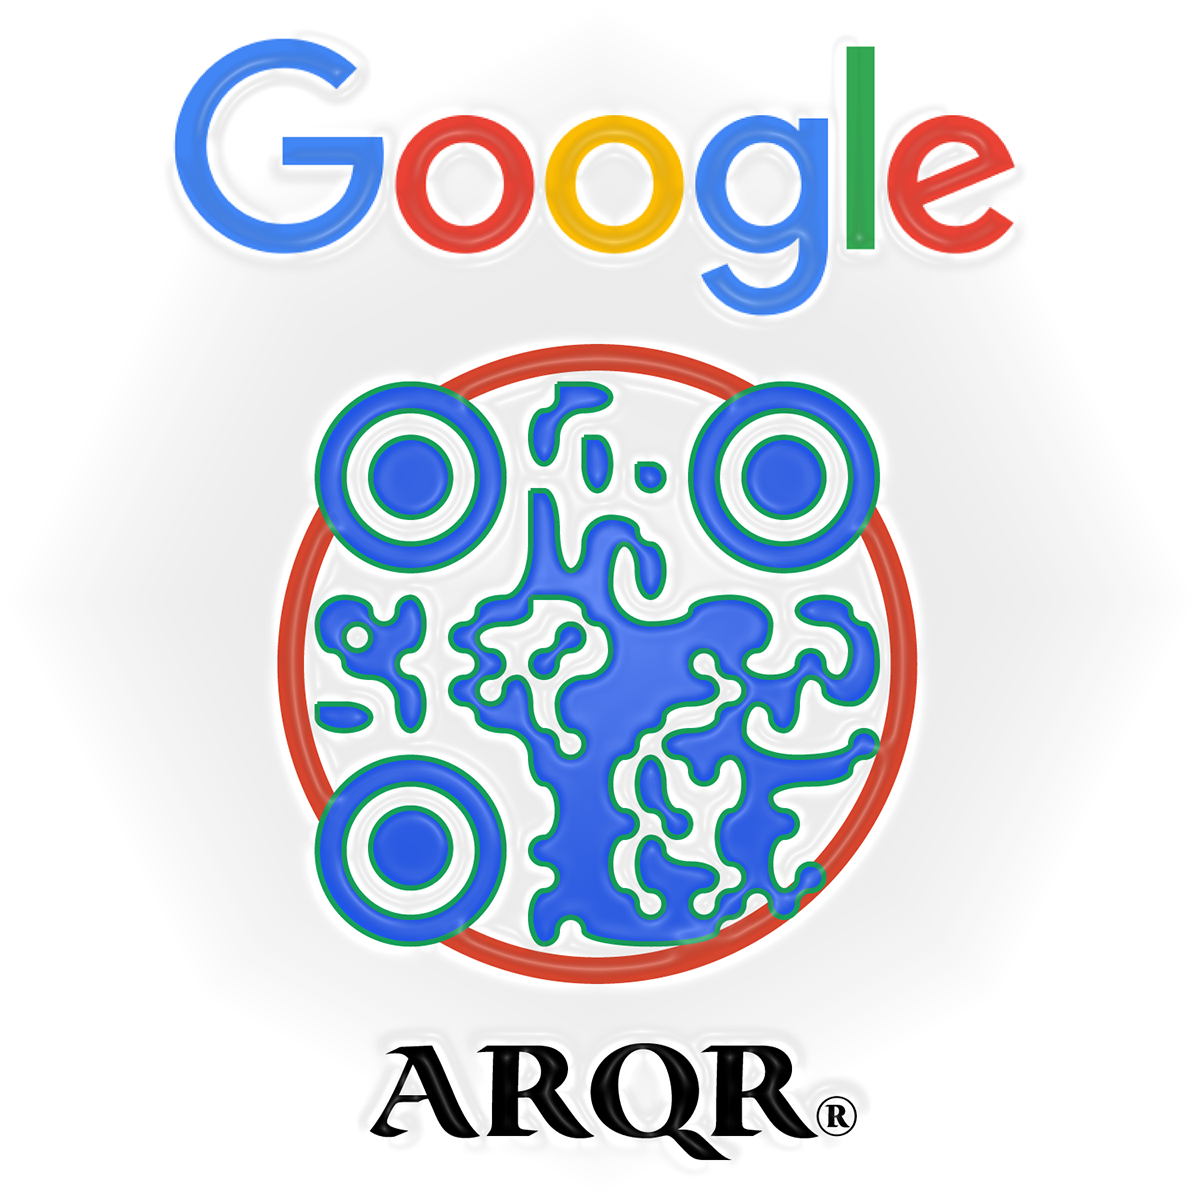 Google ARQR Code by Laird Marynick links to google.arqr.com